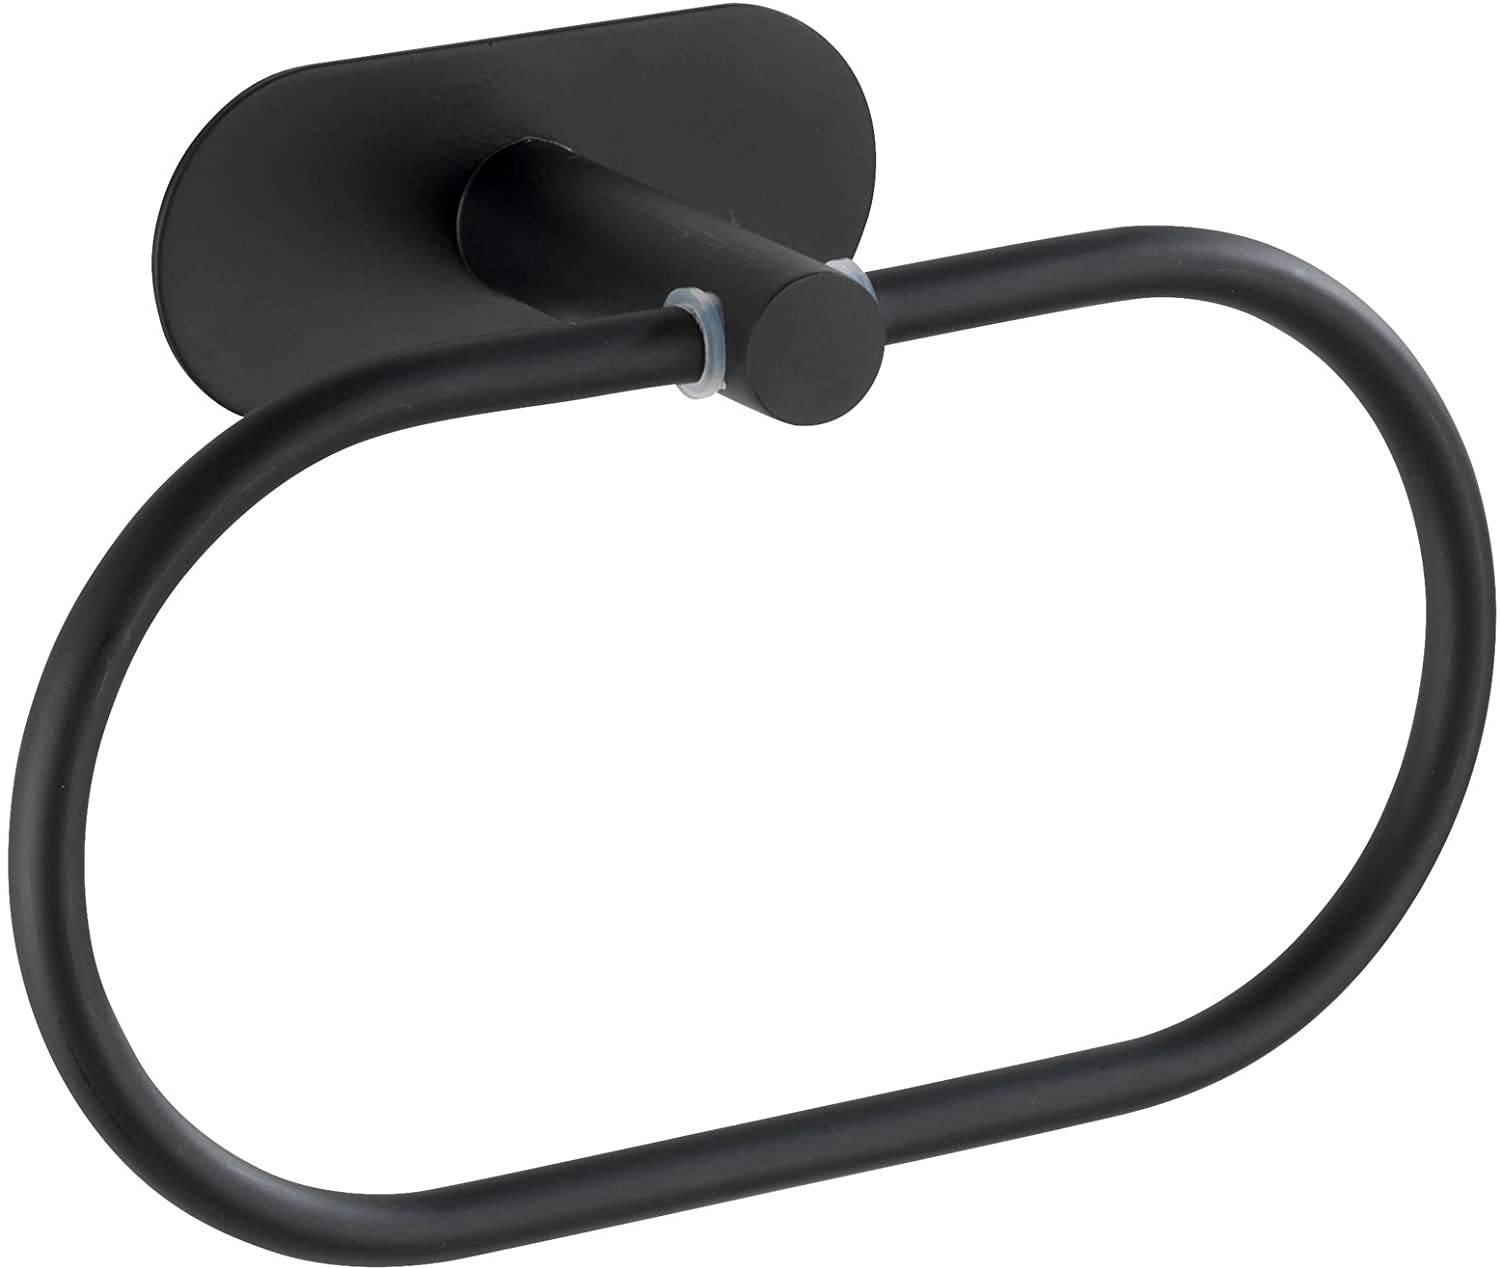 Turbo-Loc® Edelstahl Handtuchring Orea Black Matt - Handtuchhalter, Befestigen ohne bohren, Edelstahl rostfrei, 20.5 x 12.5 x 7.5 cm, Schwarz